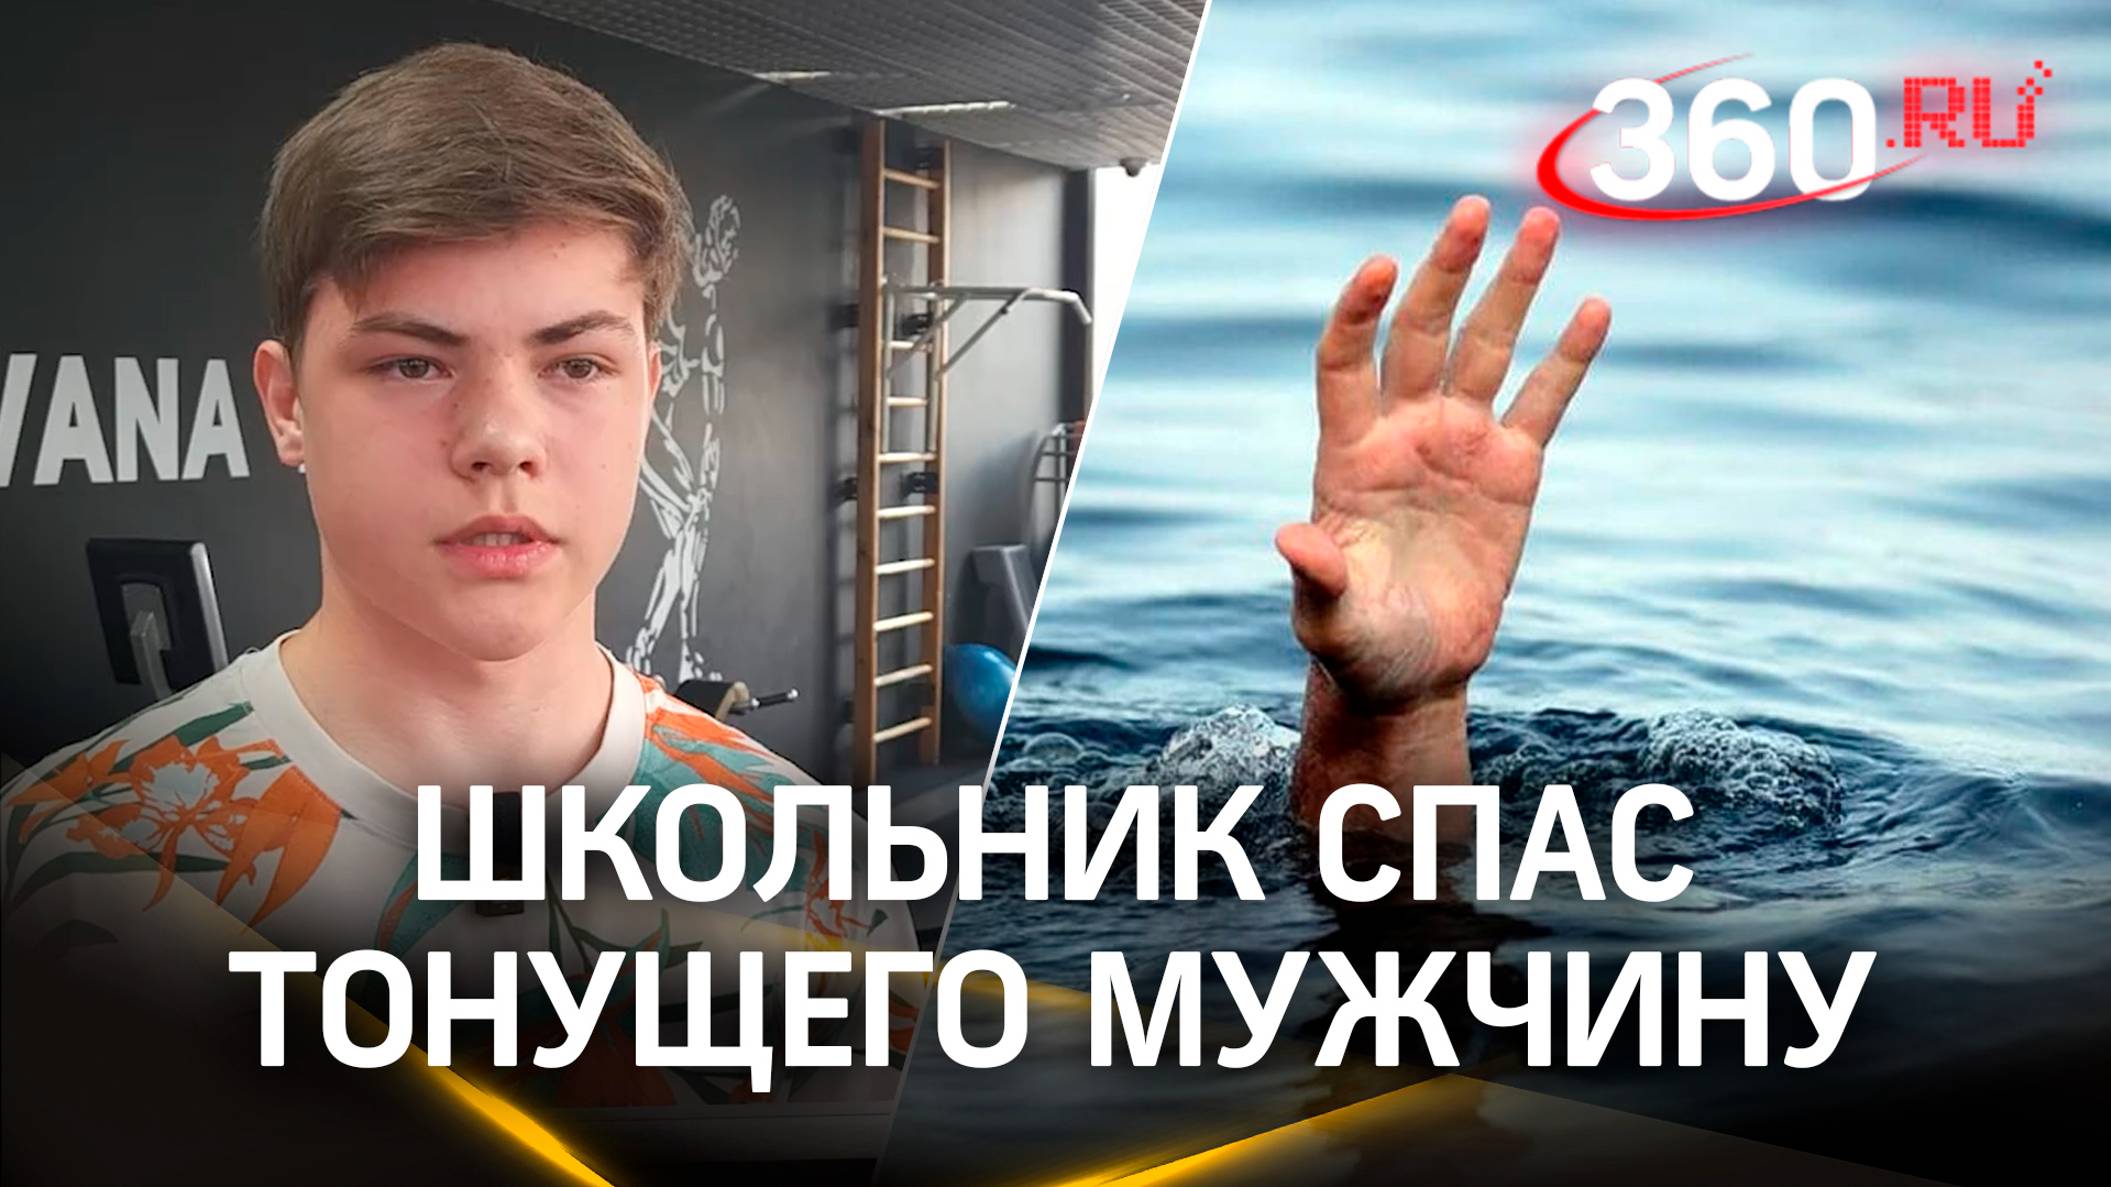 Достал со дна: школьник из Одинцова спас тонущего мужчину